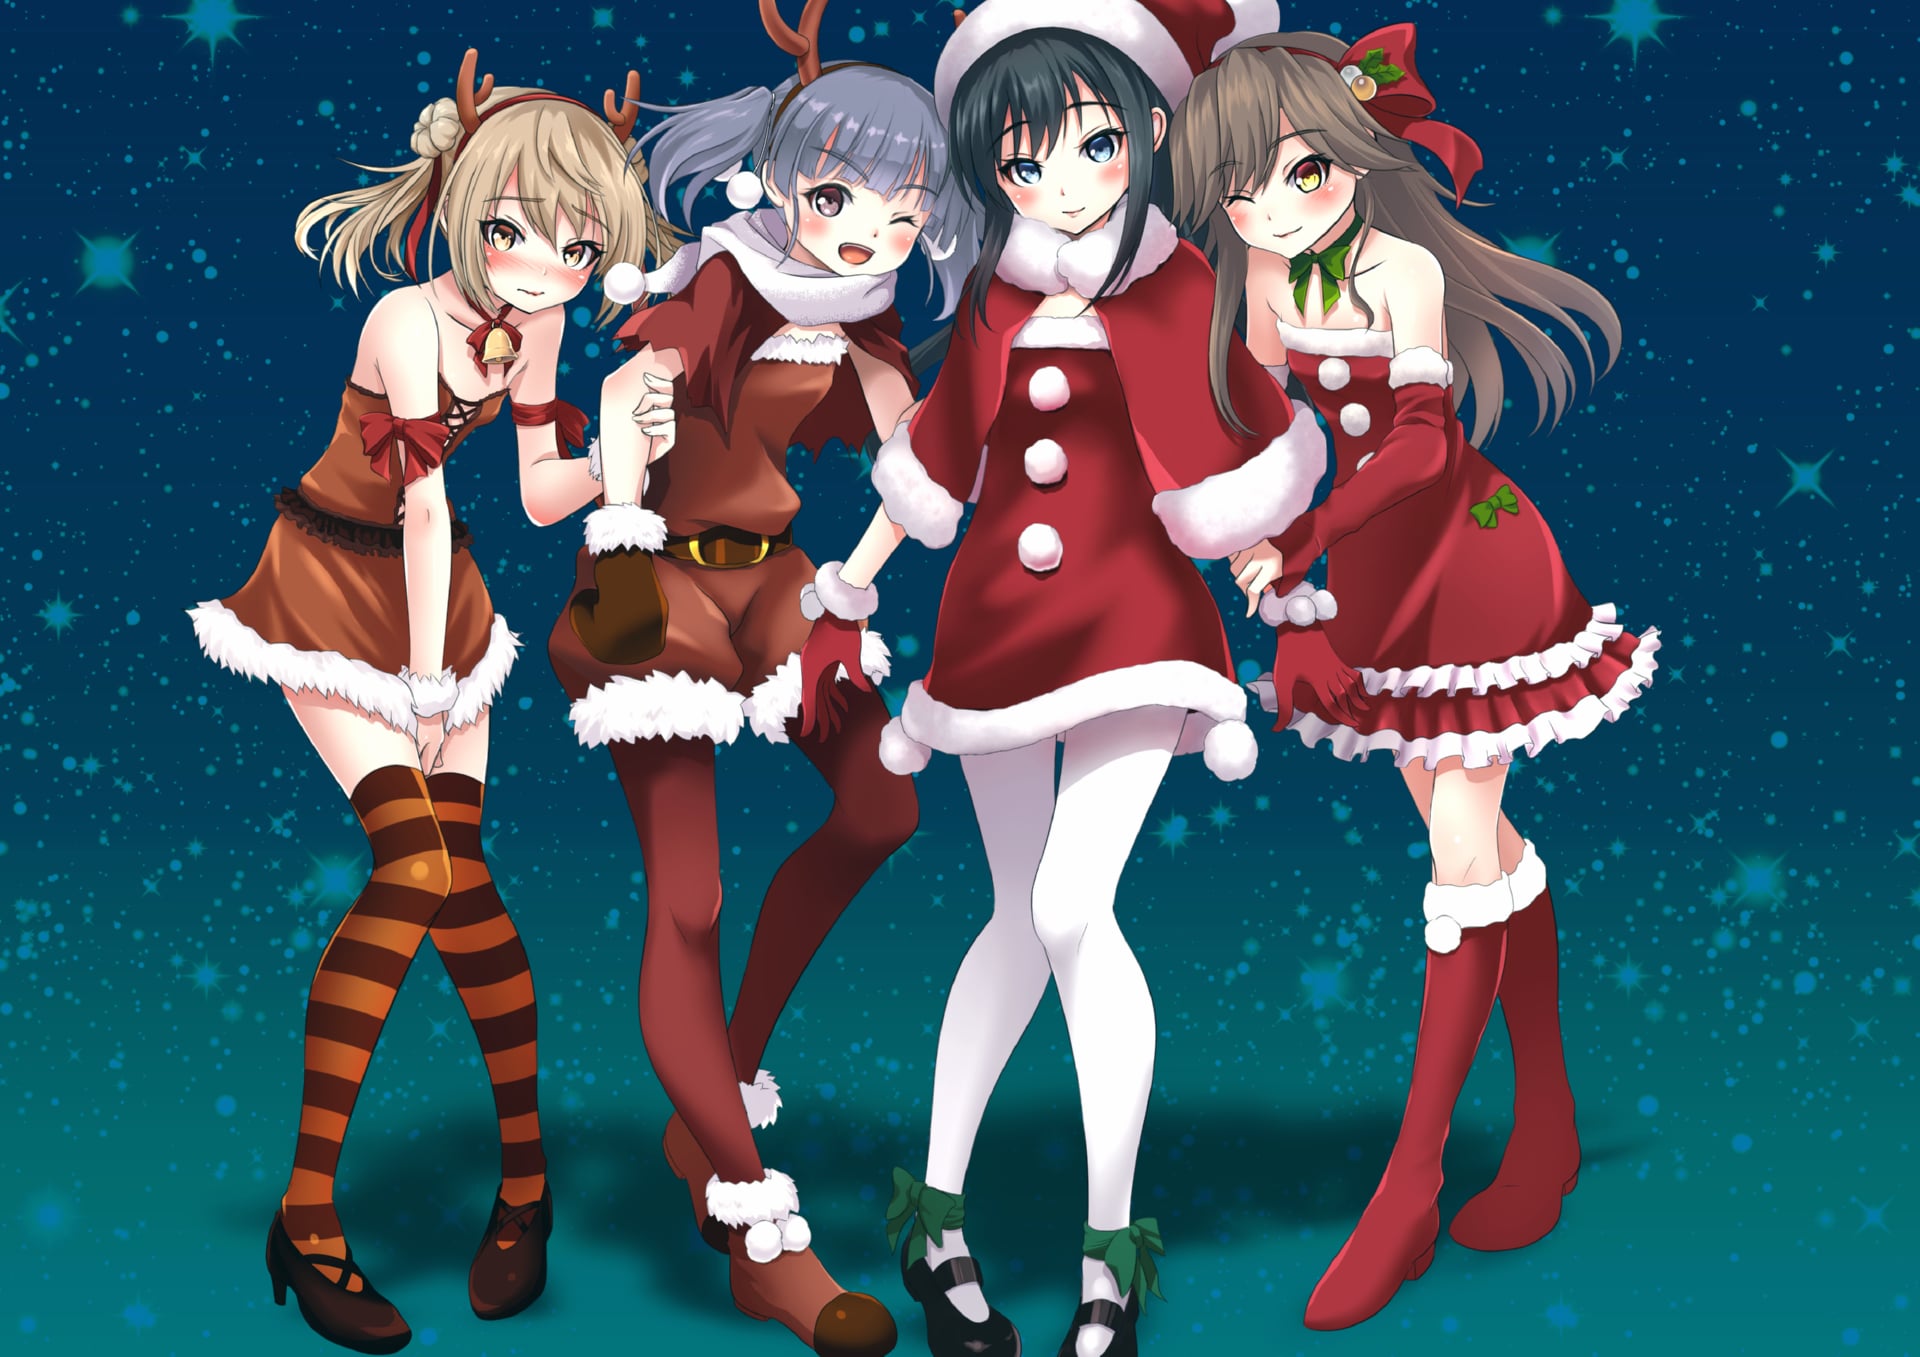 Anime Christmas at 1024 x 1024 iPad size wallpapers HD quality